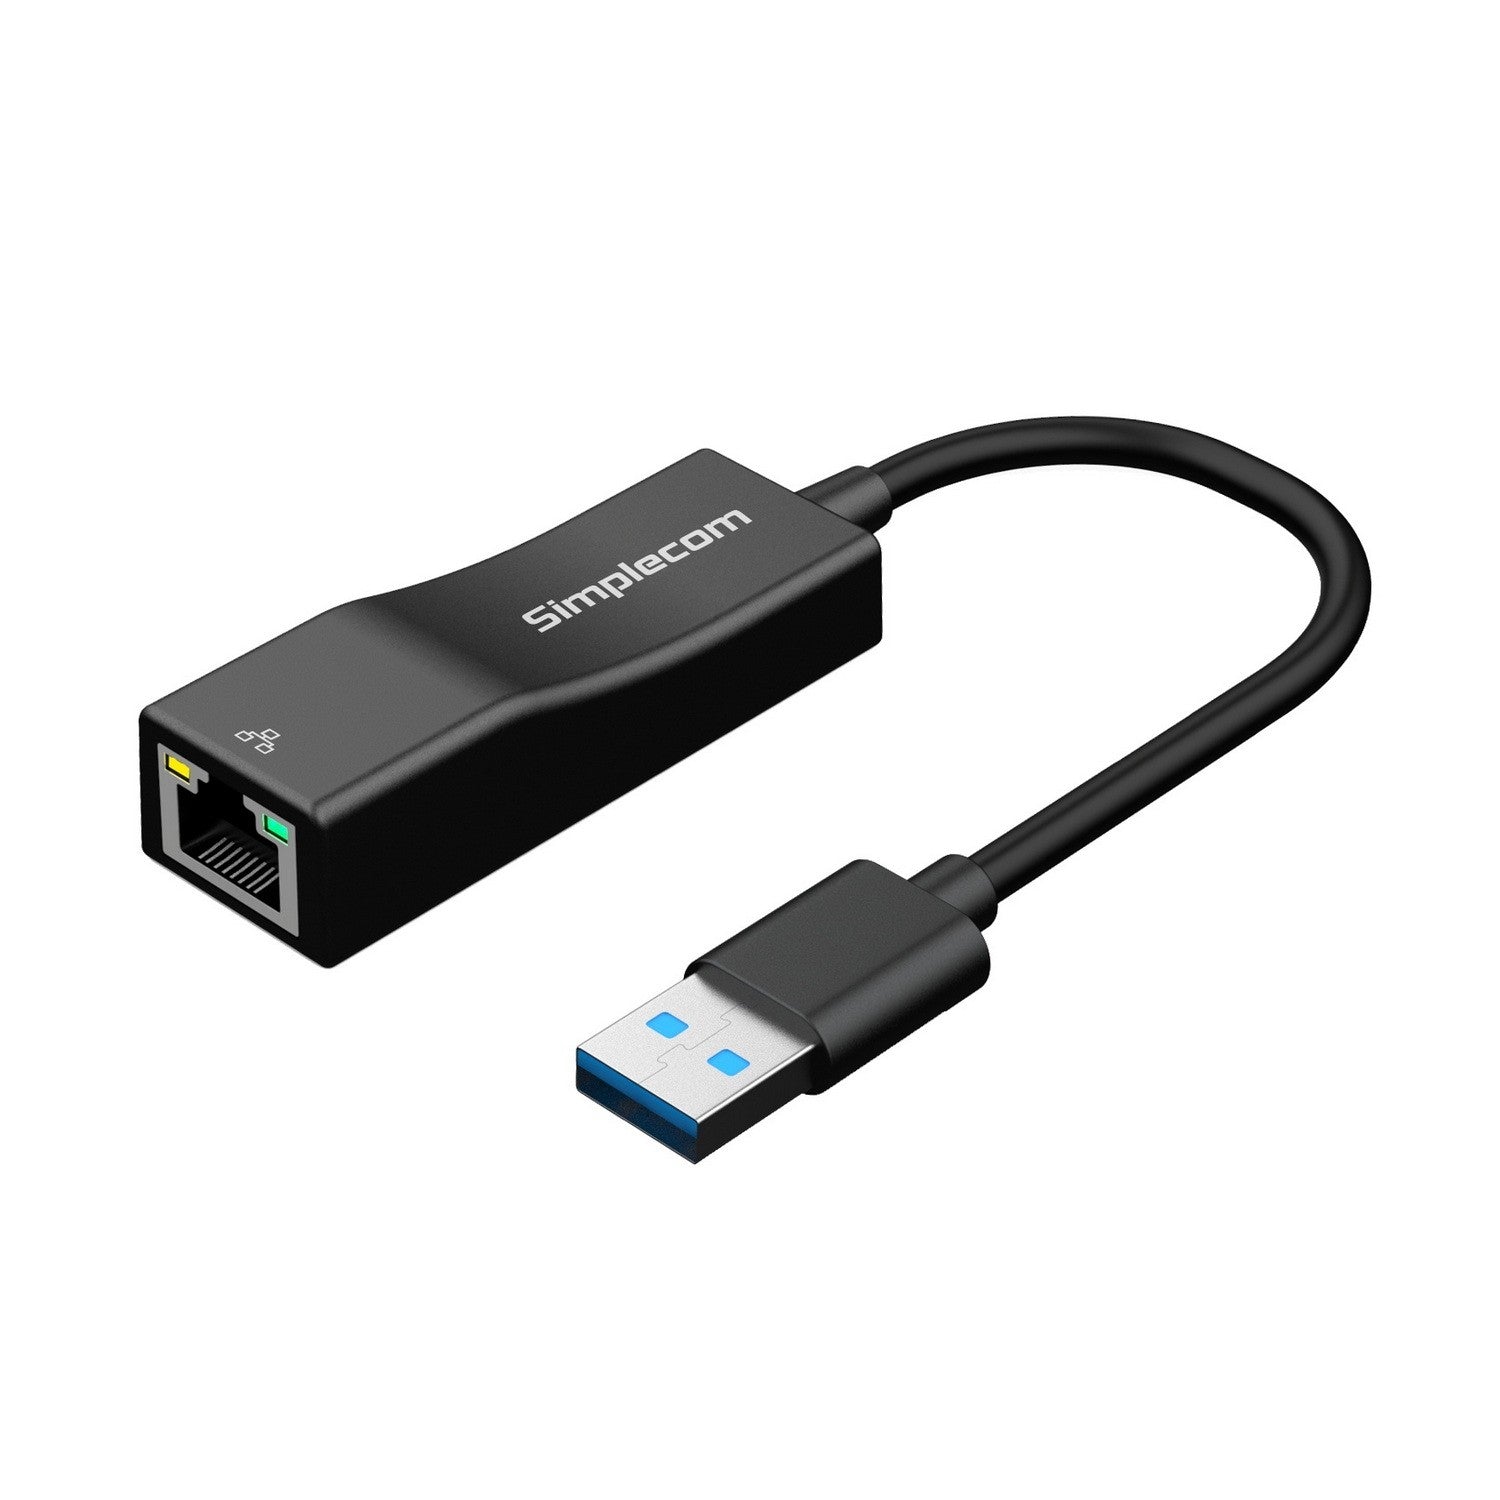 Simplecom USB 3.0 to RJ45 Gigabit 1000Mbps Ethernet Network Adapter